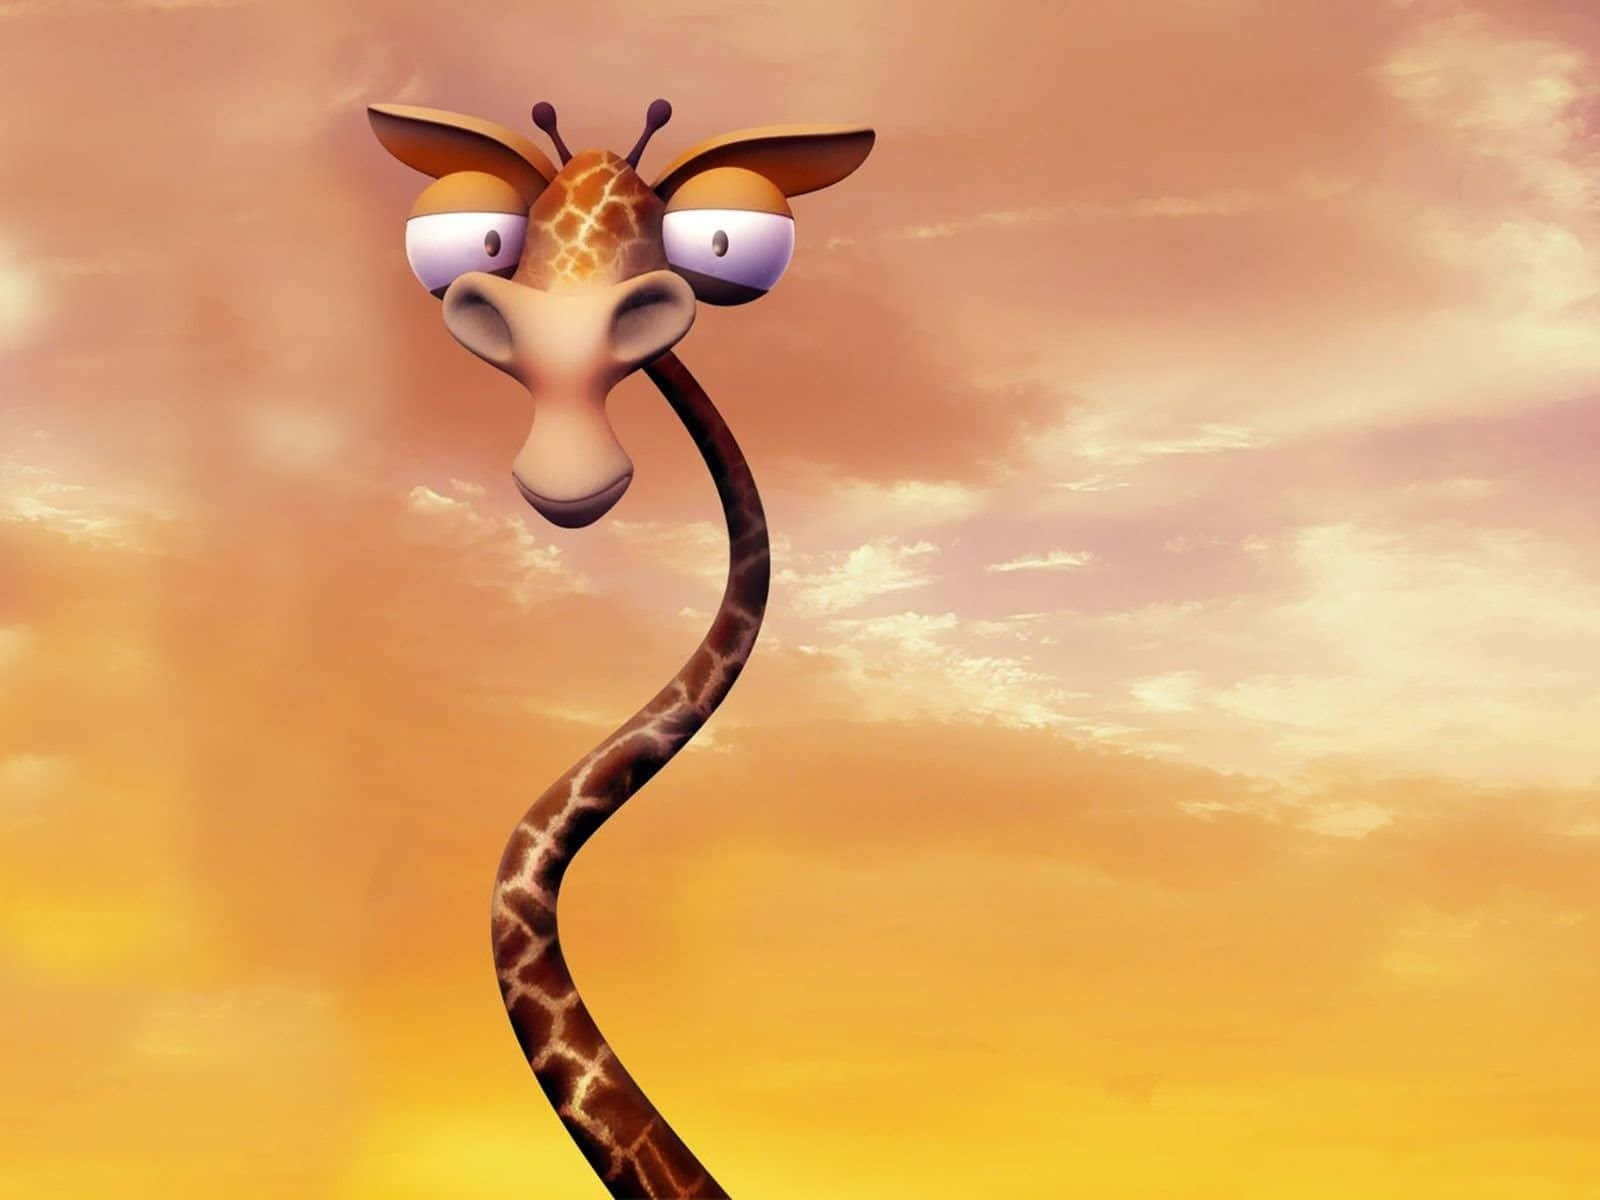 3D Art Funny Giraffe With Thin Neck Wallpaper